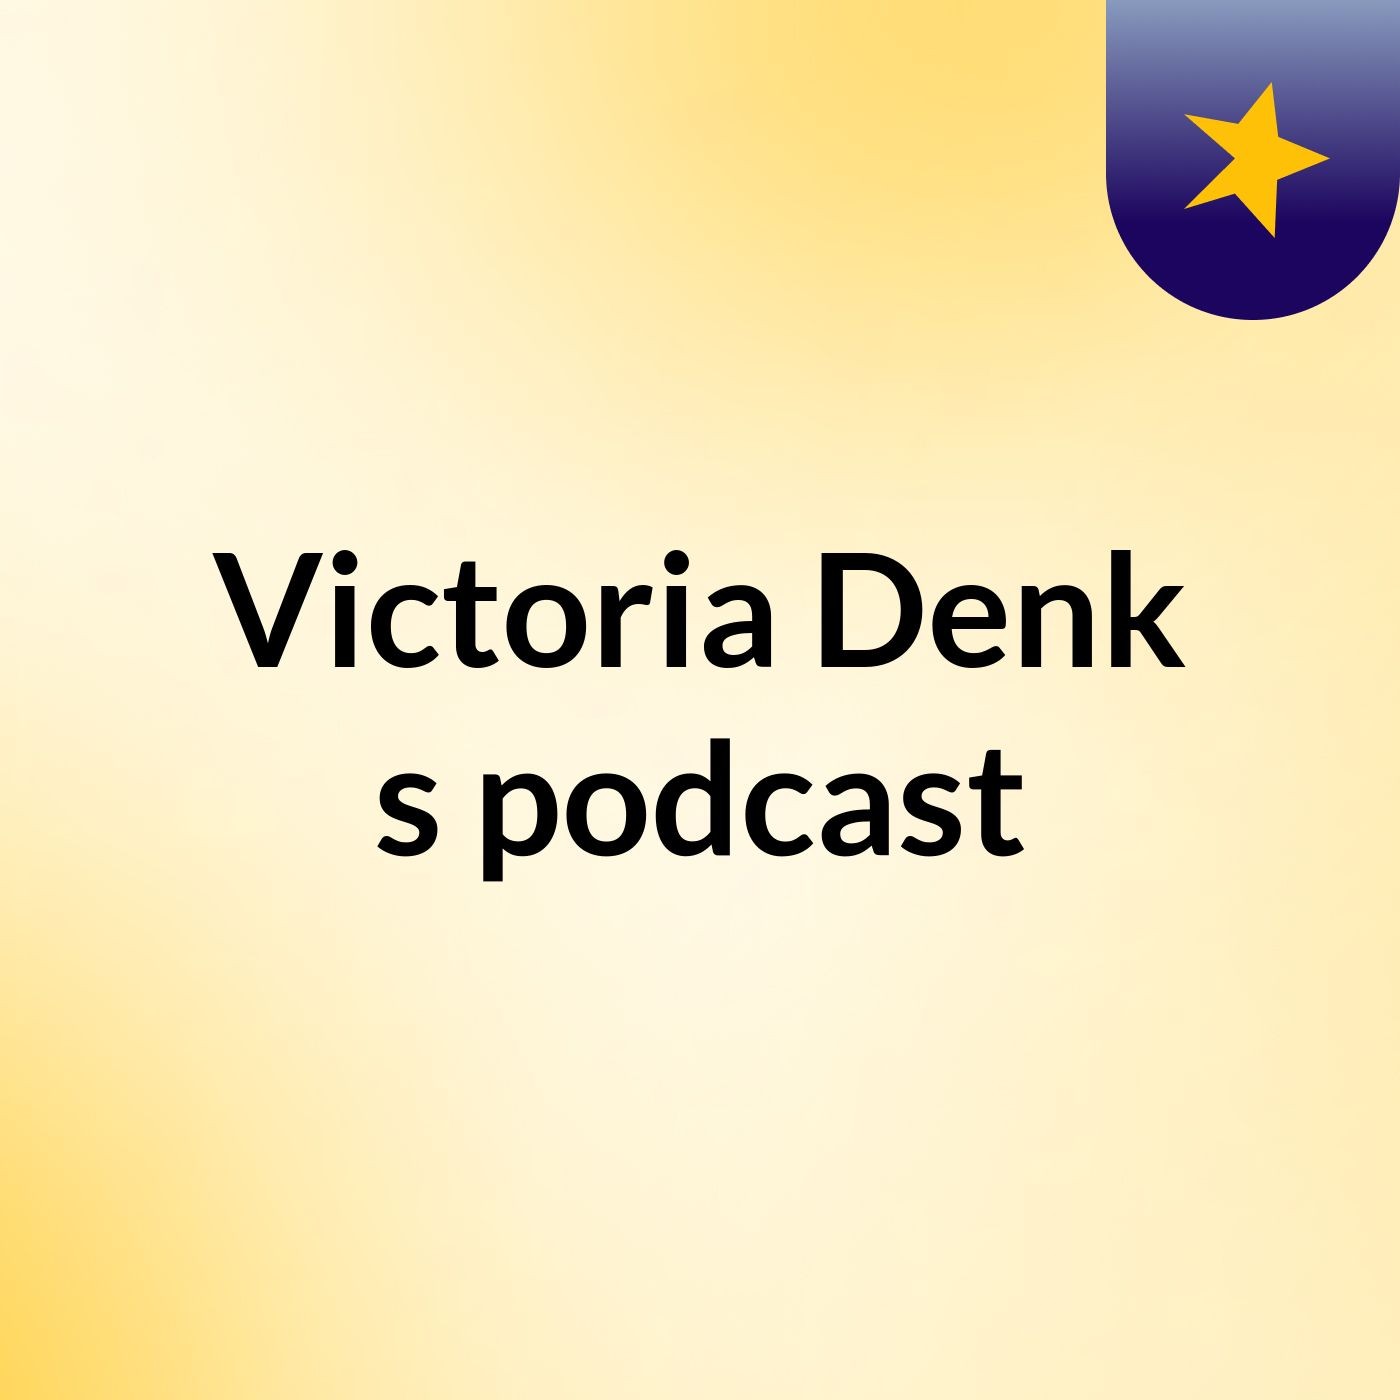 Victoria Denk's podcast